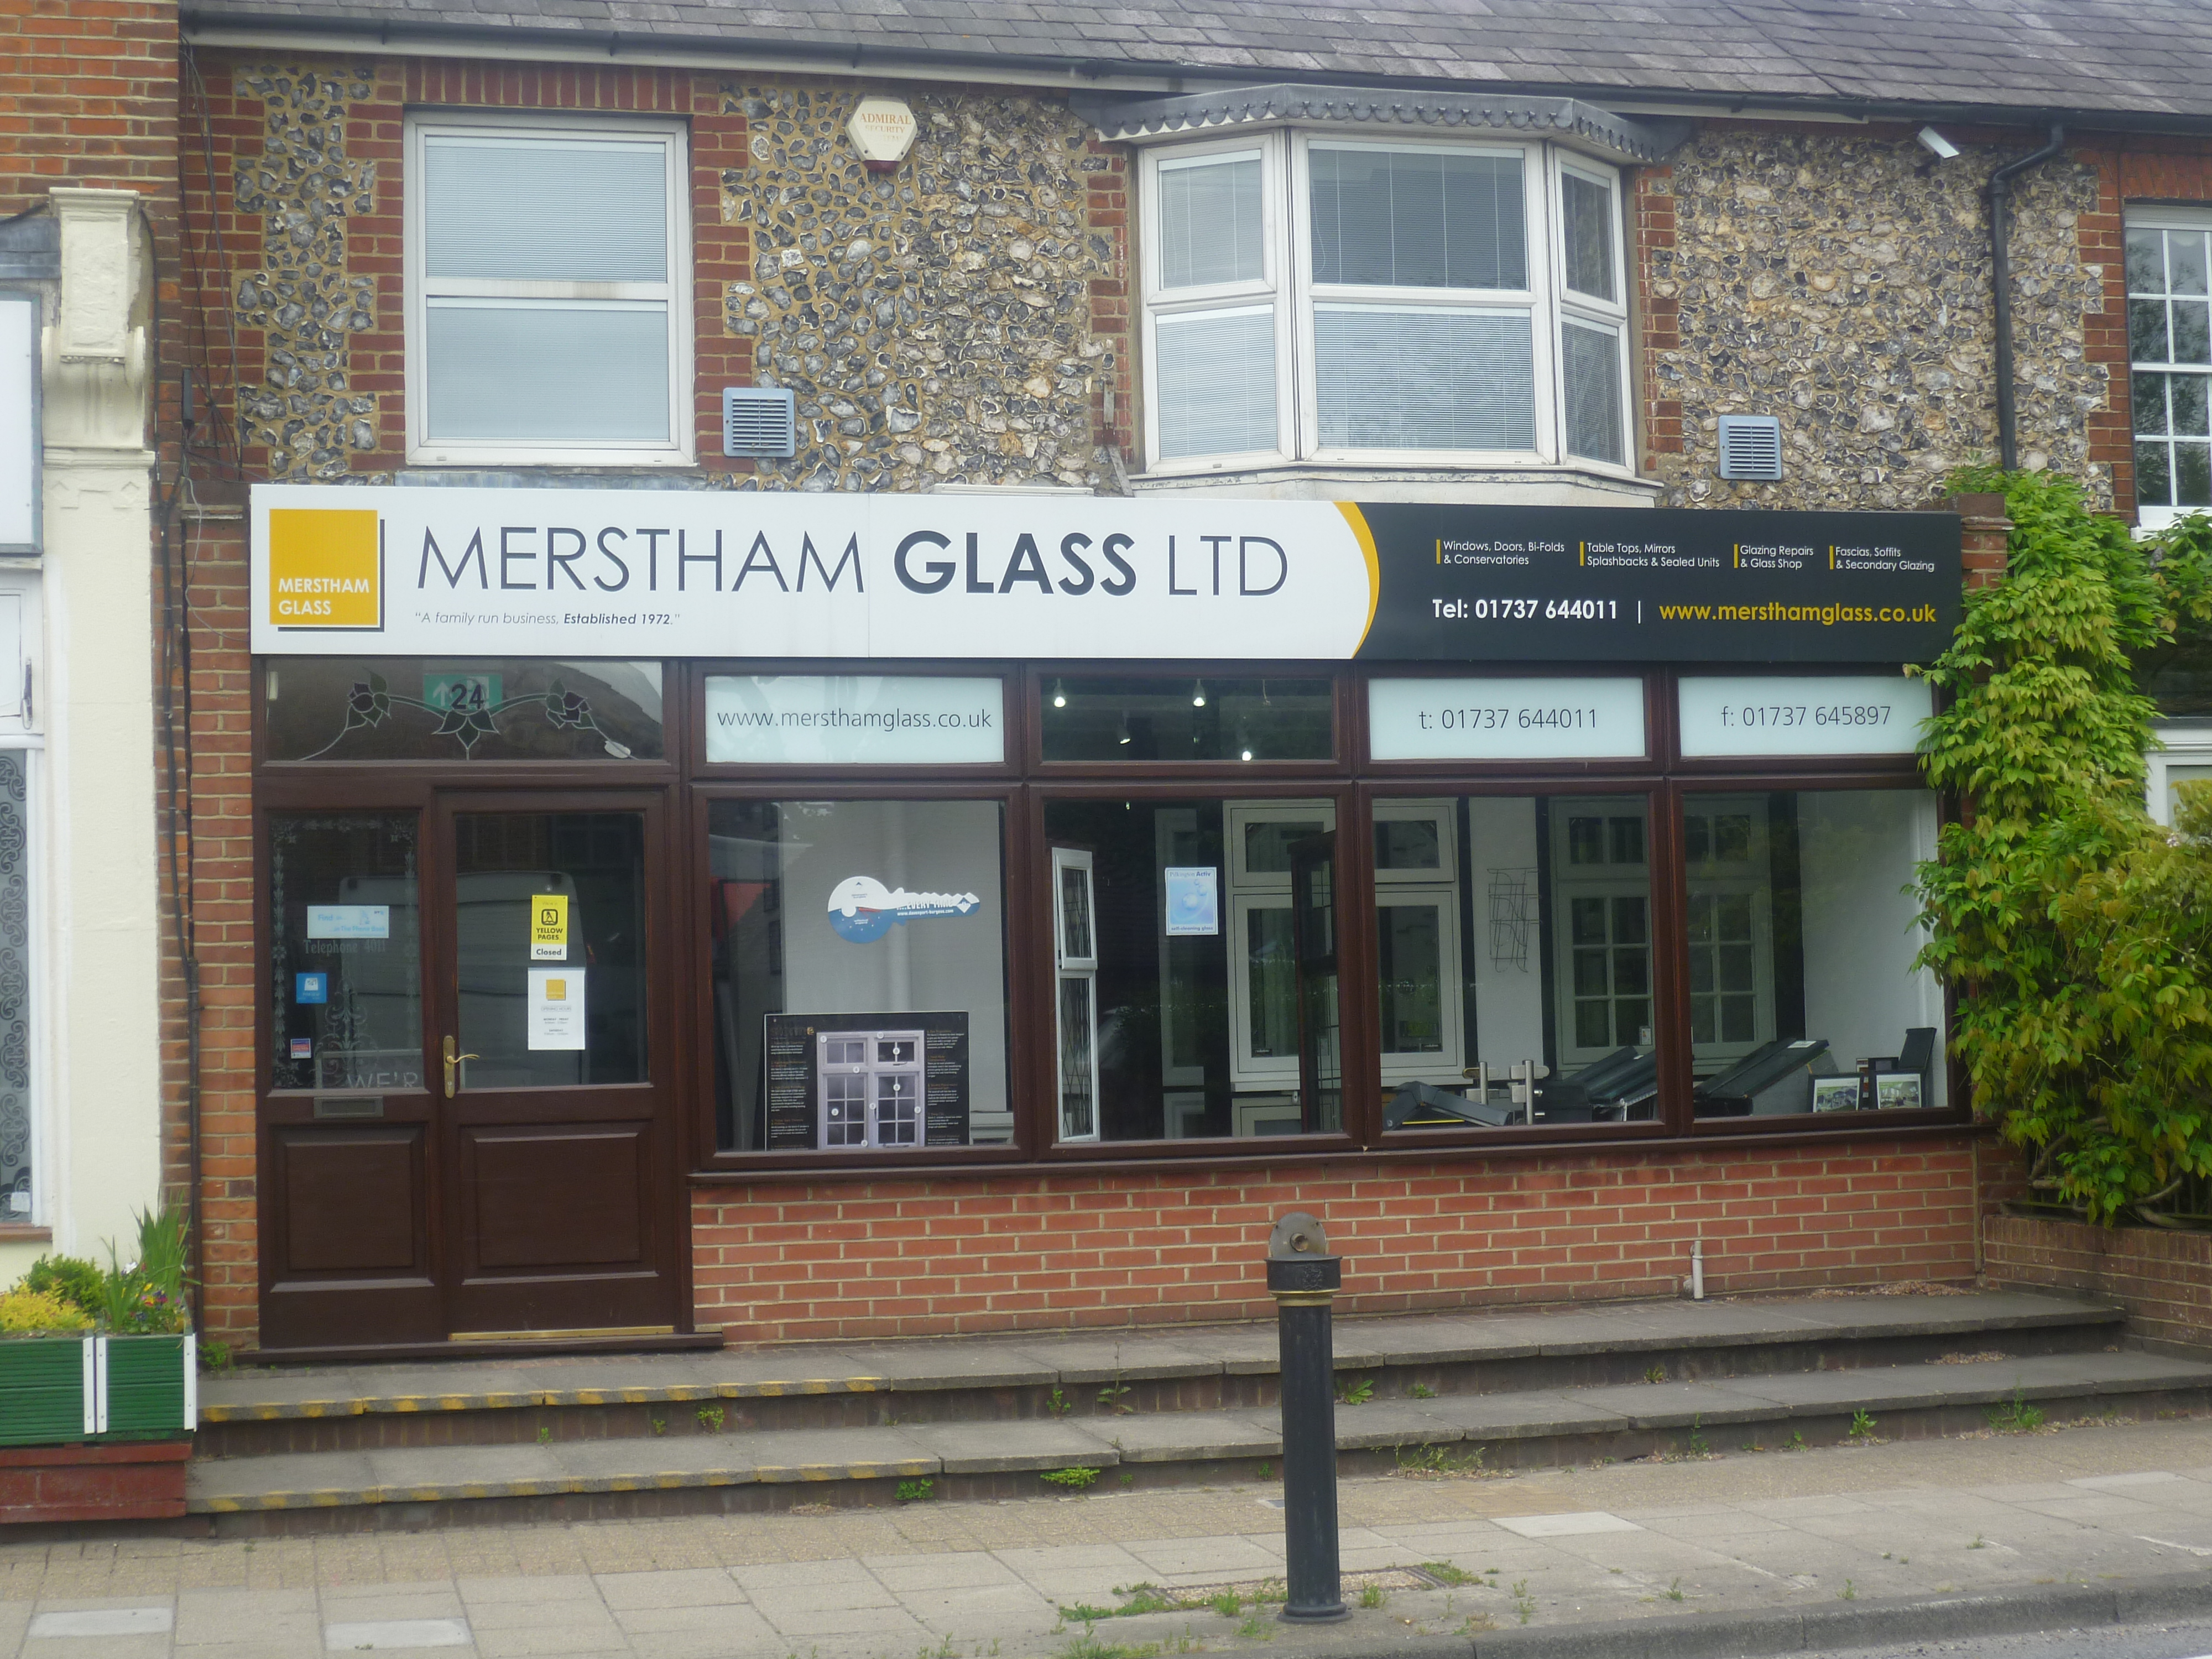 Merstham Glass Ltd